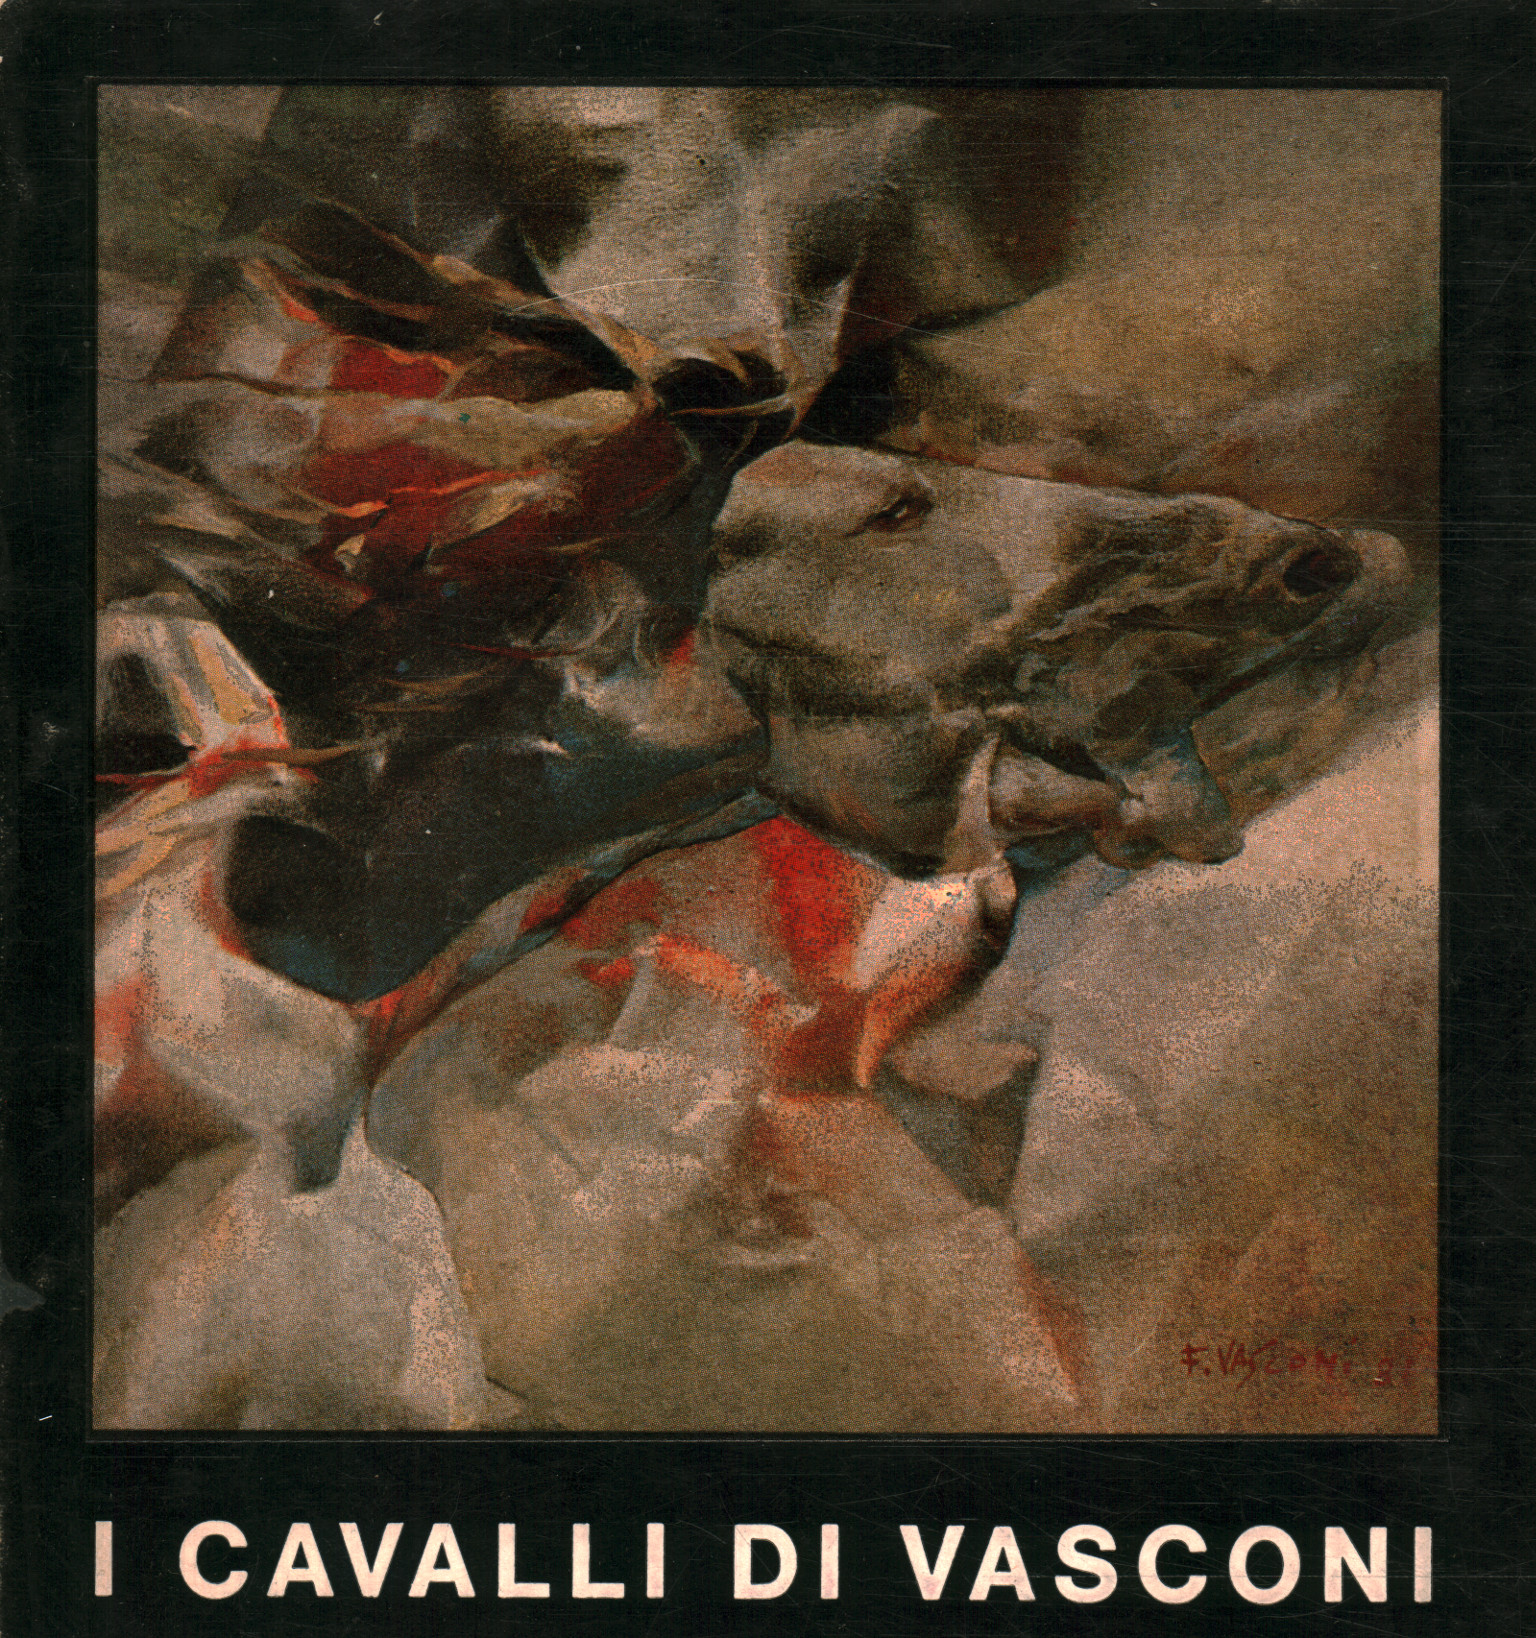 Vasconi's horses